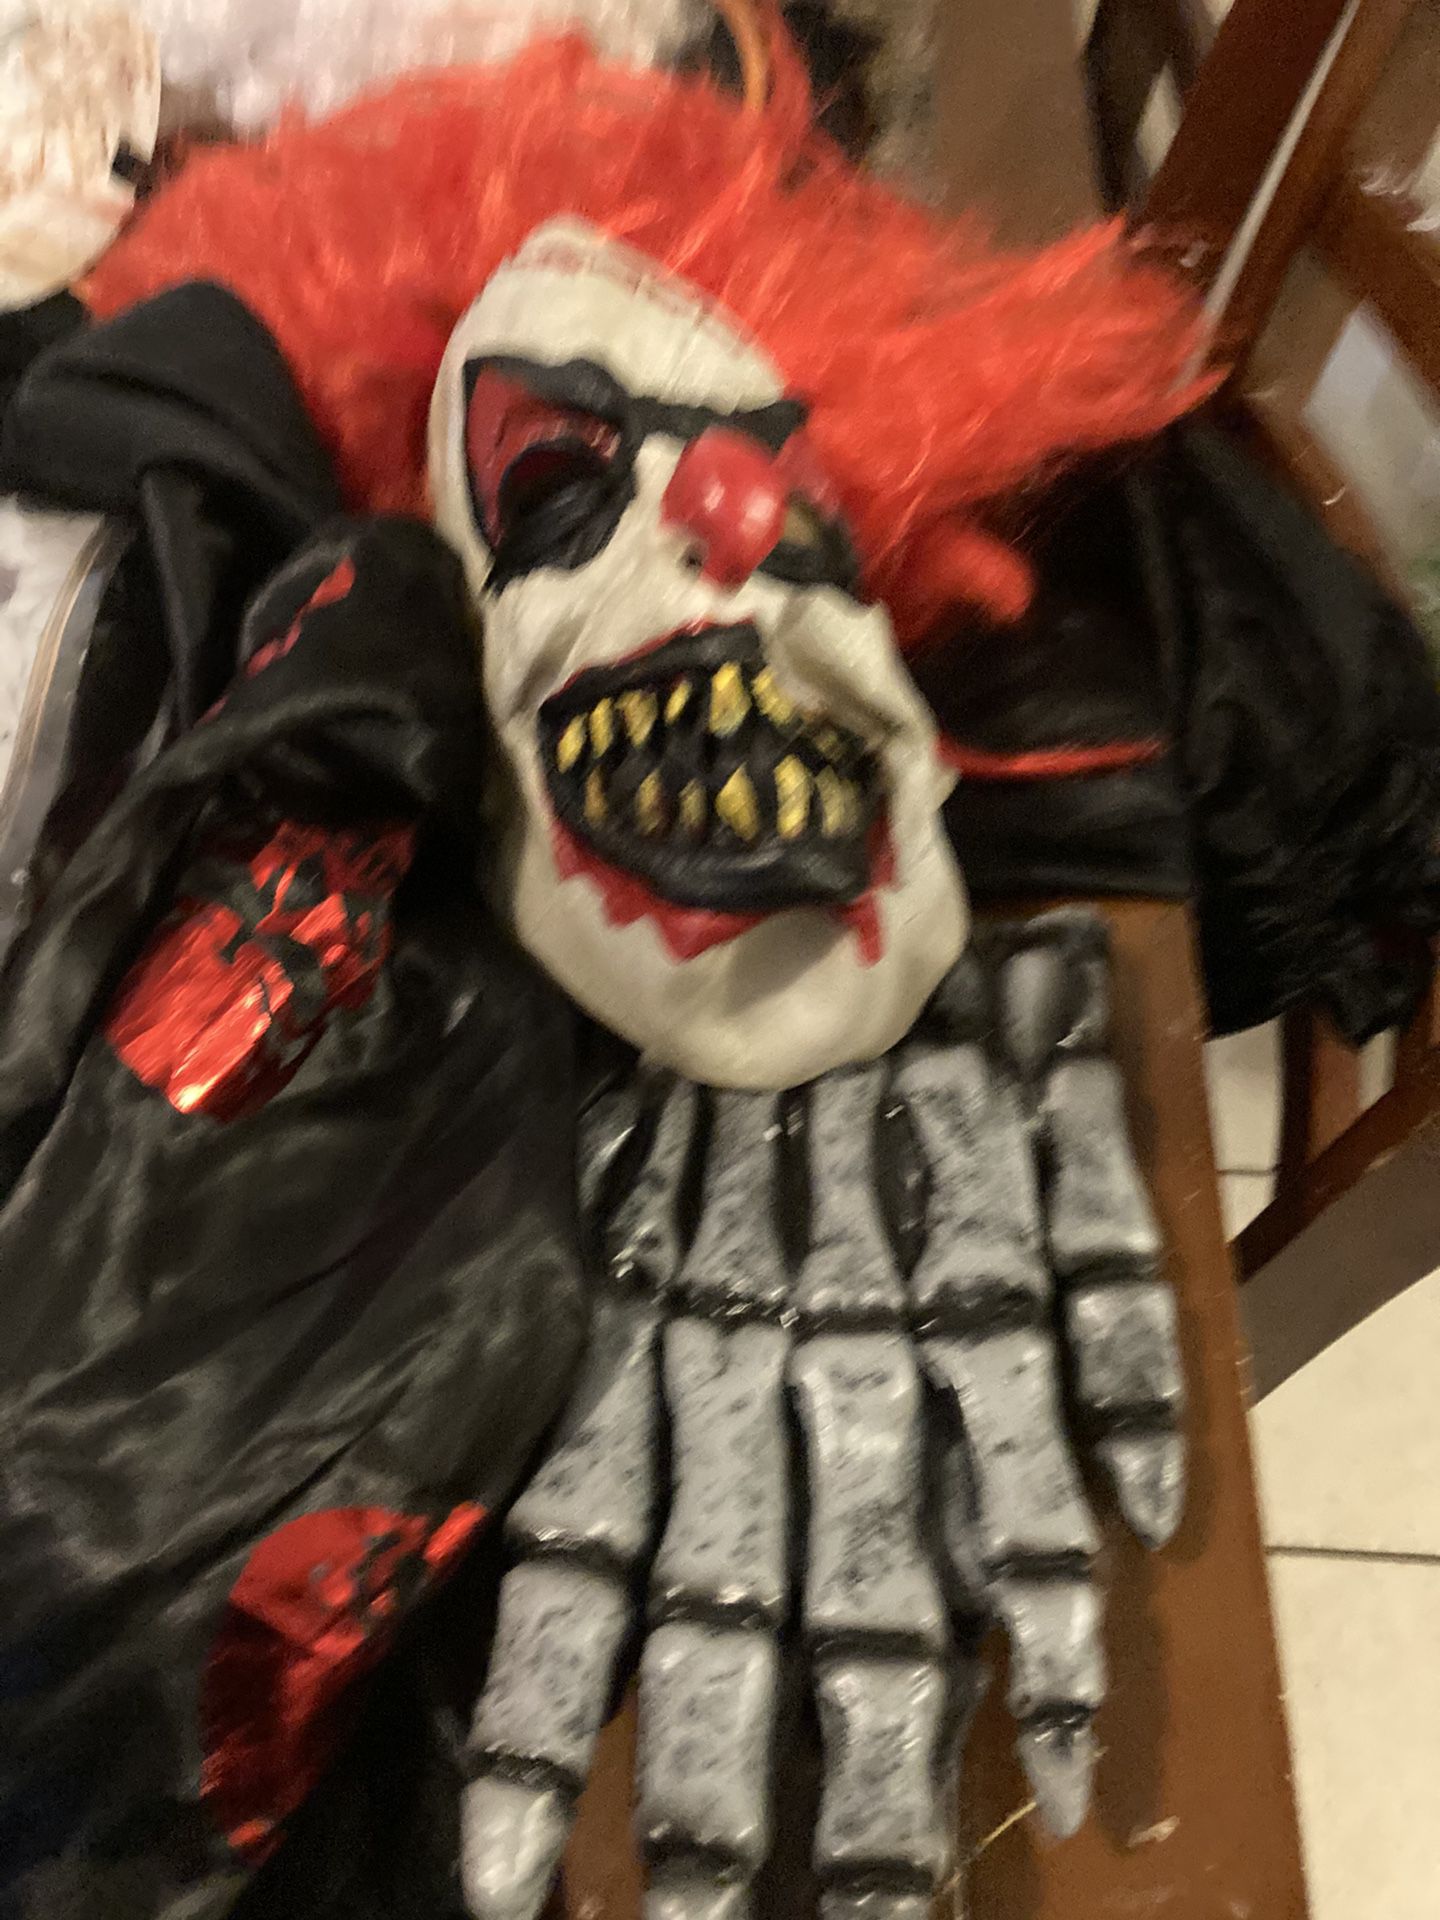 Killer clown adult male costume $15 firm